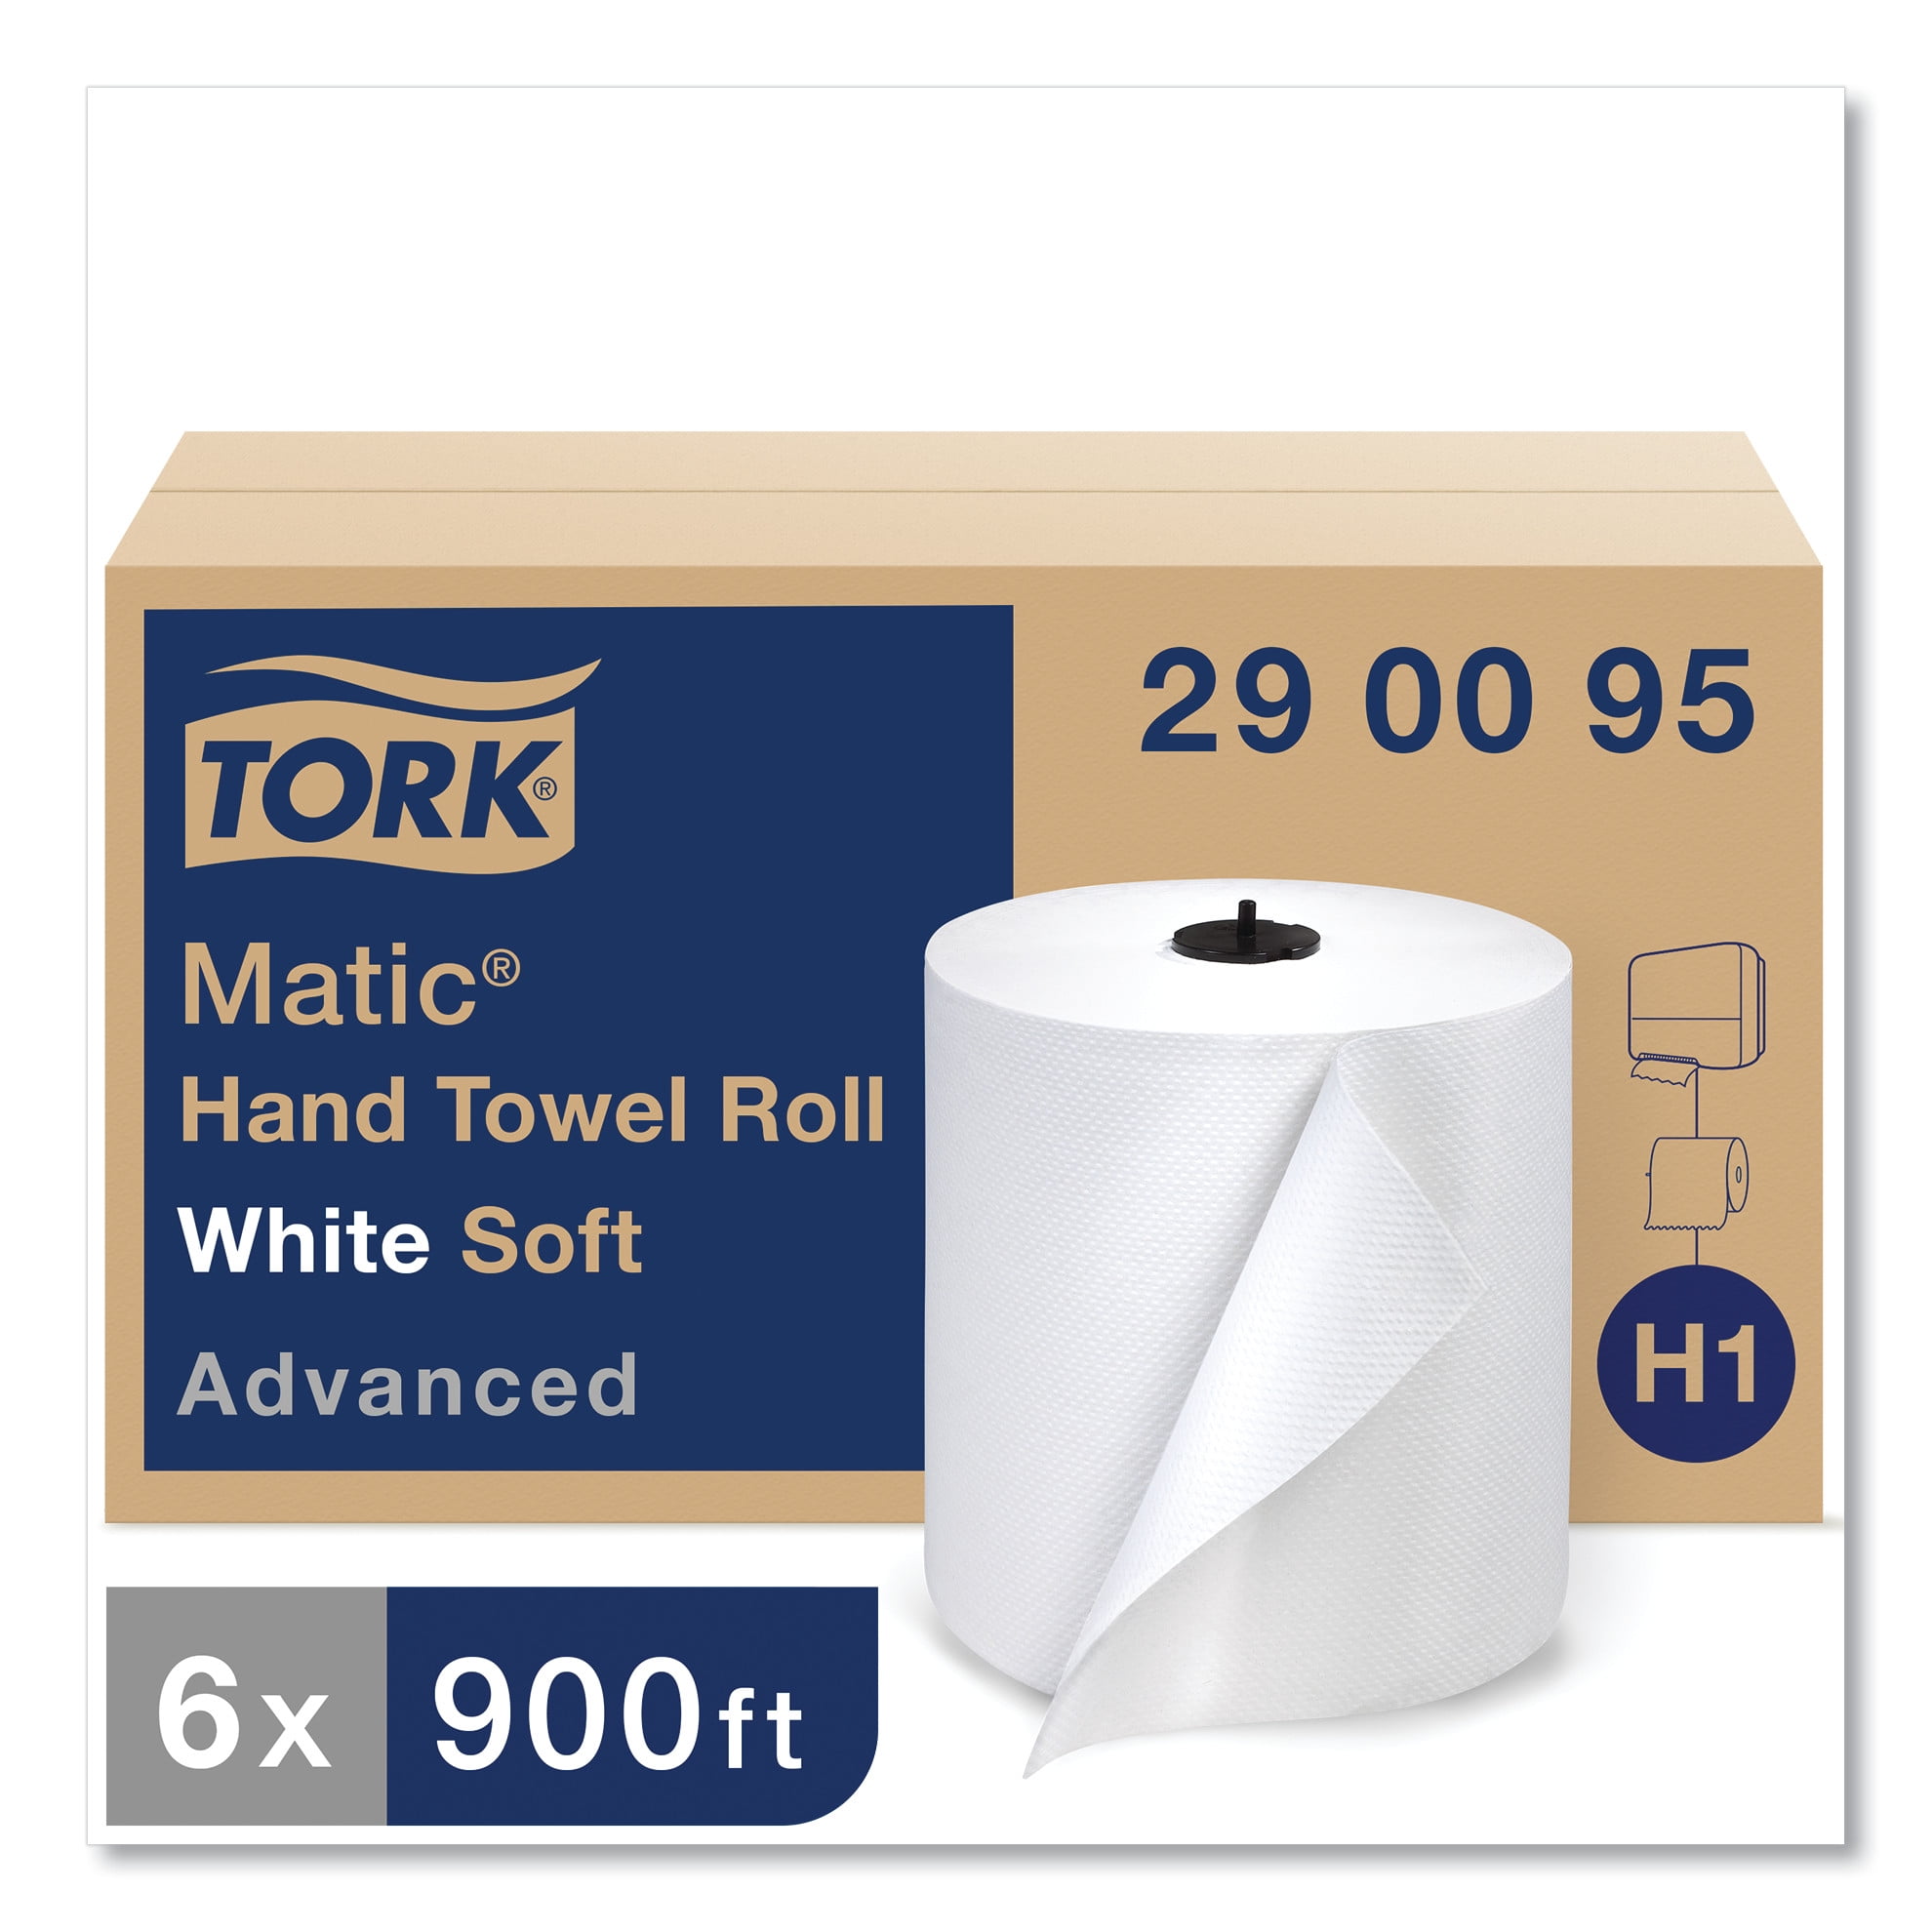 Полотенца tork matic. Tork matic h1. Торк матик hand Towel Roll диспенсер. Полотенца бумажные рулонные. Бумага полотенце в рулонах.